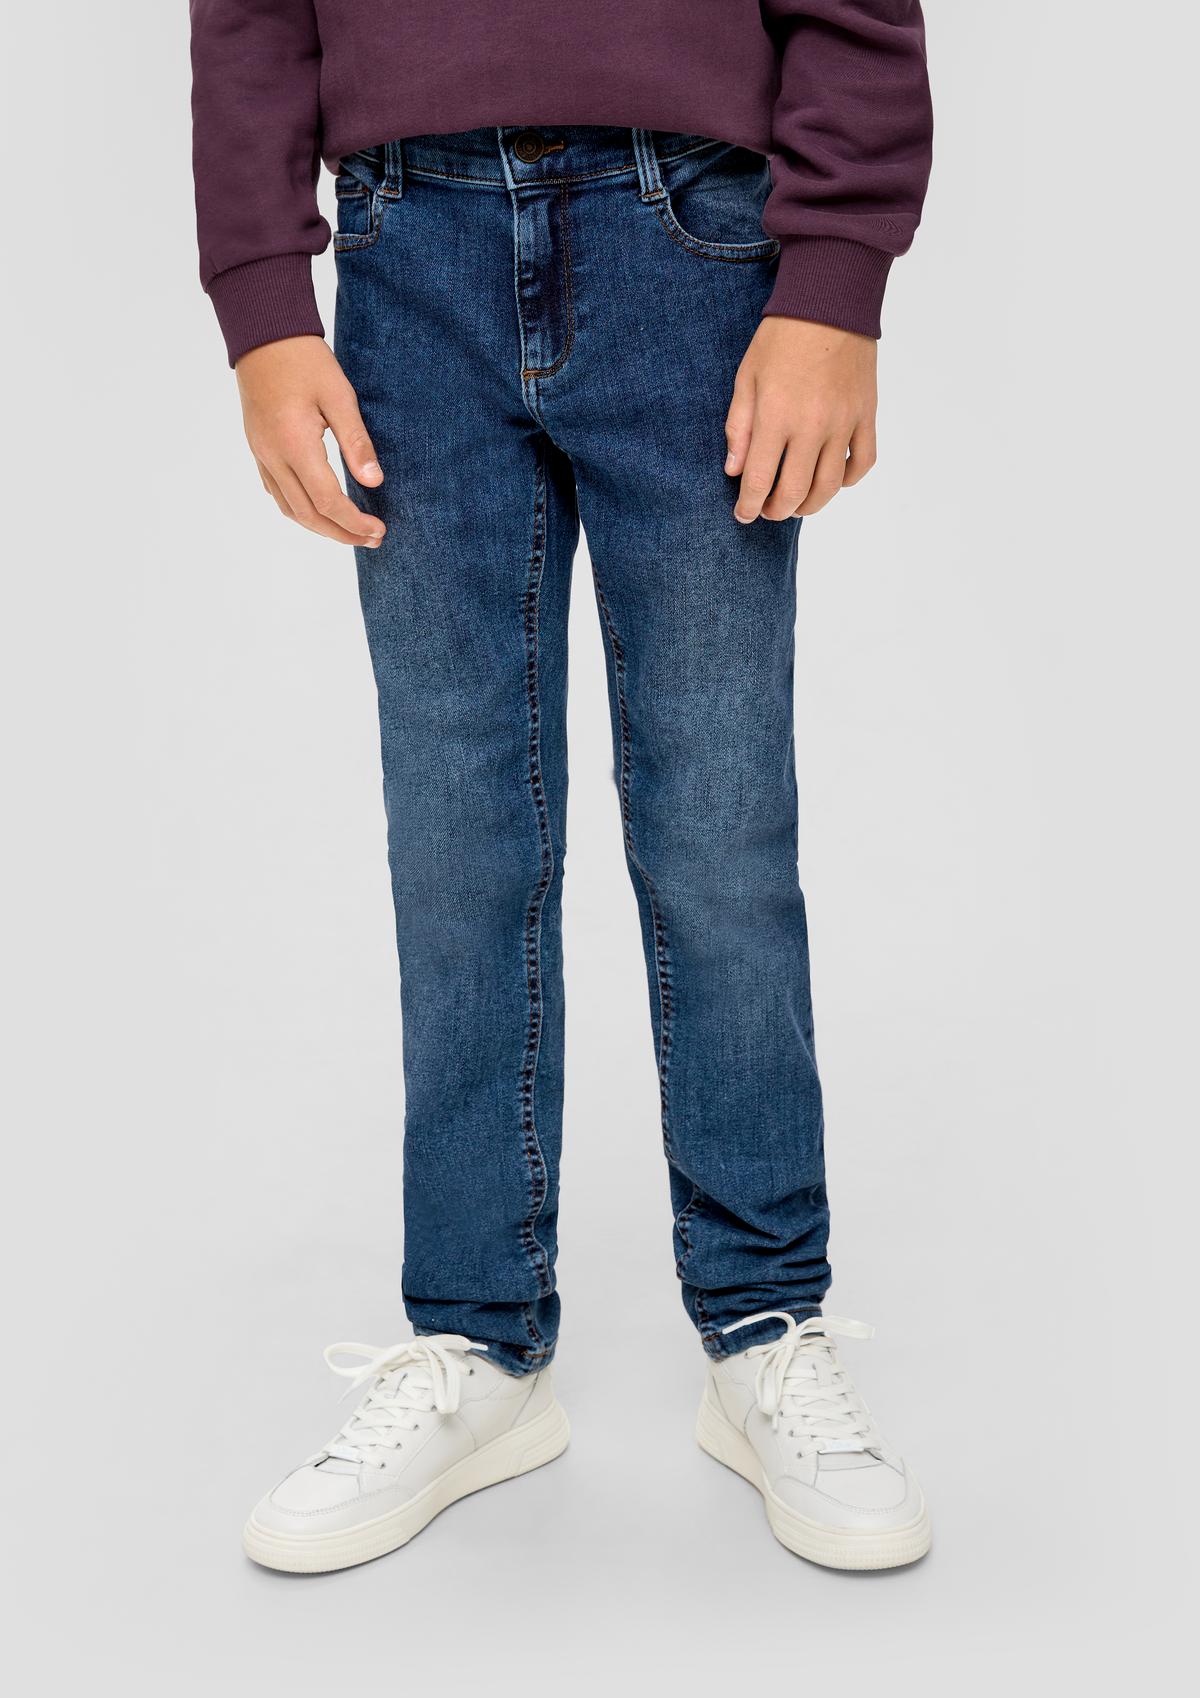 Seattle jeans / slim fit / mid rise / skinny leg